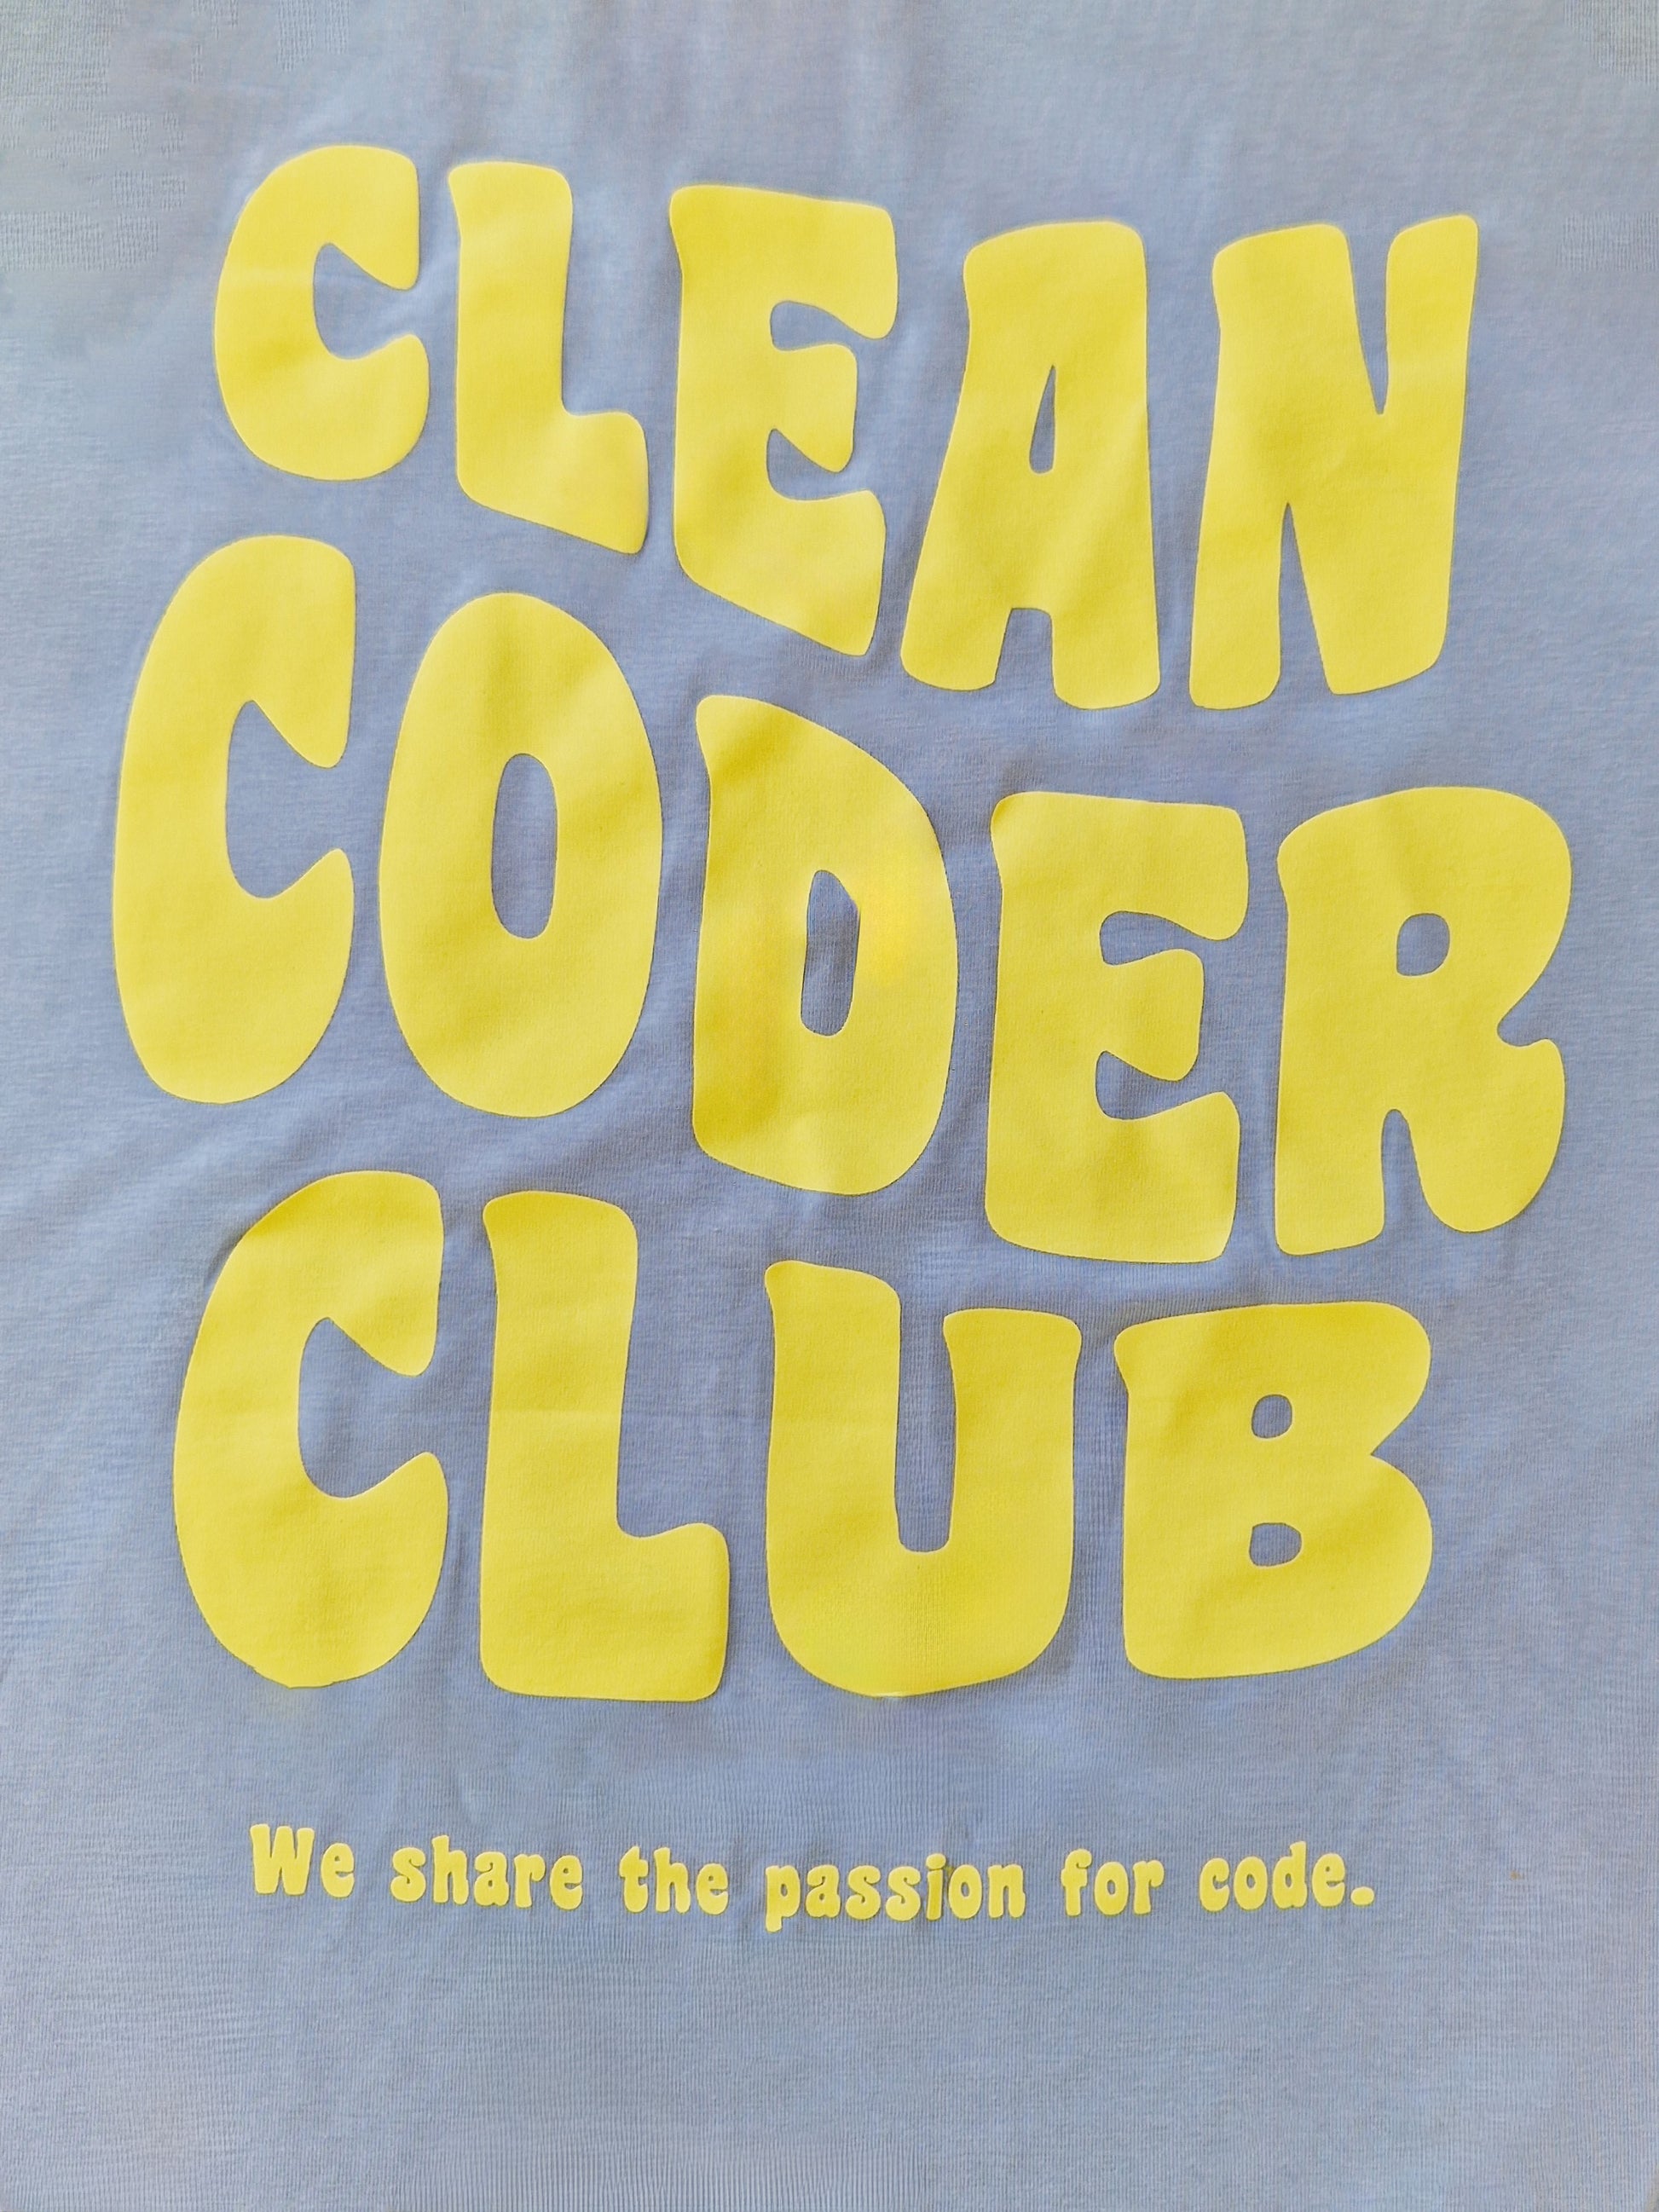 Coder / Programmer t-shirt Design "Clean Coder Club"